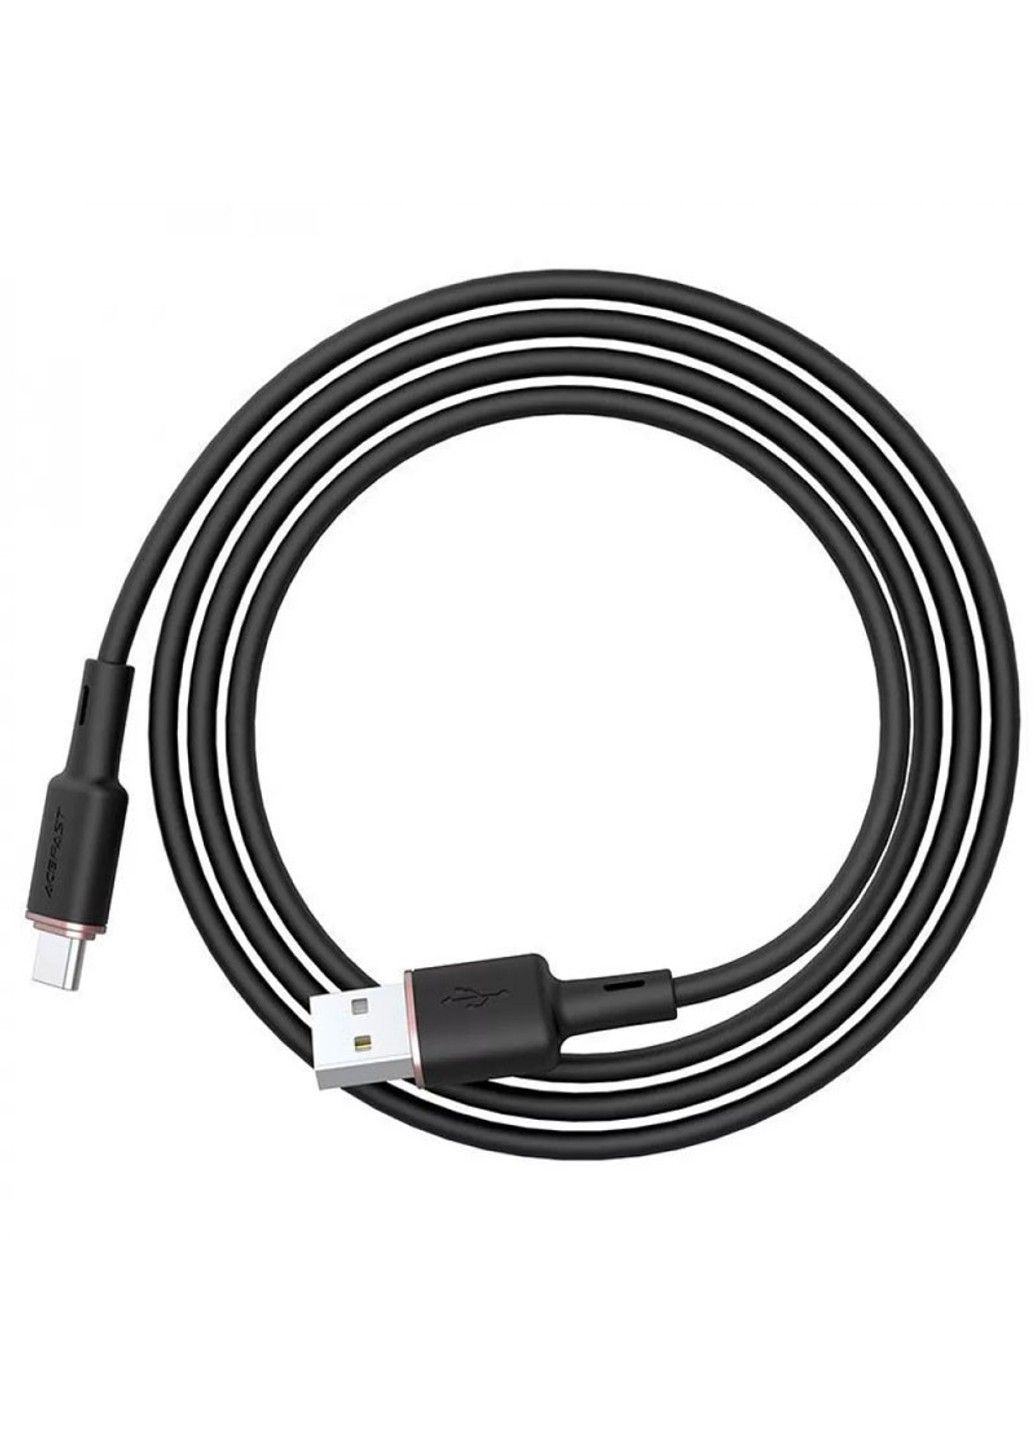 Дата кабель C2-04 USB-A to USB-C zinc alloy silicone (1.2m) Acefast (291879222)